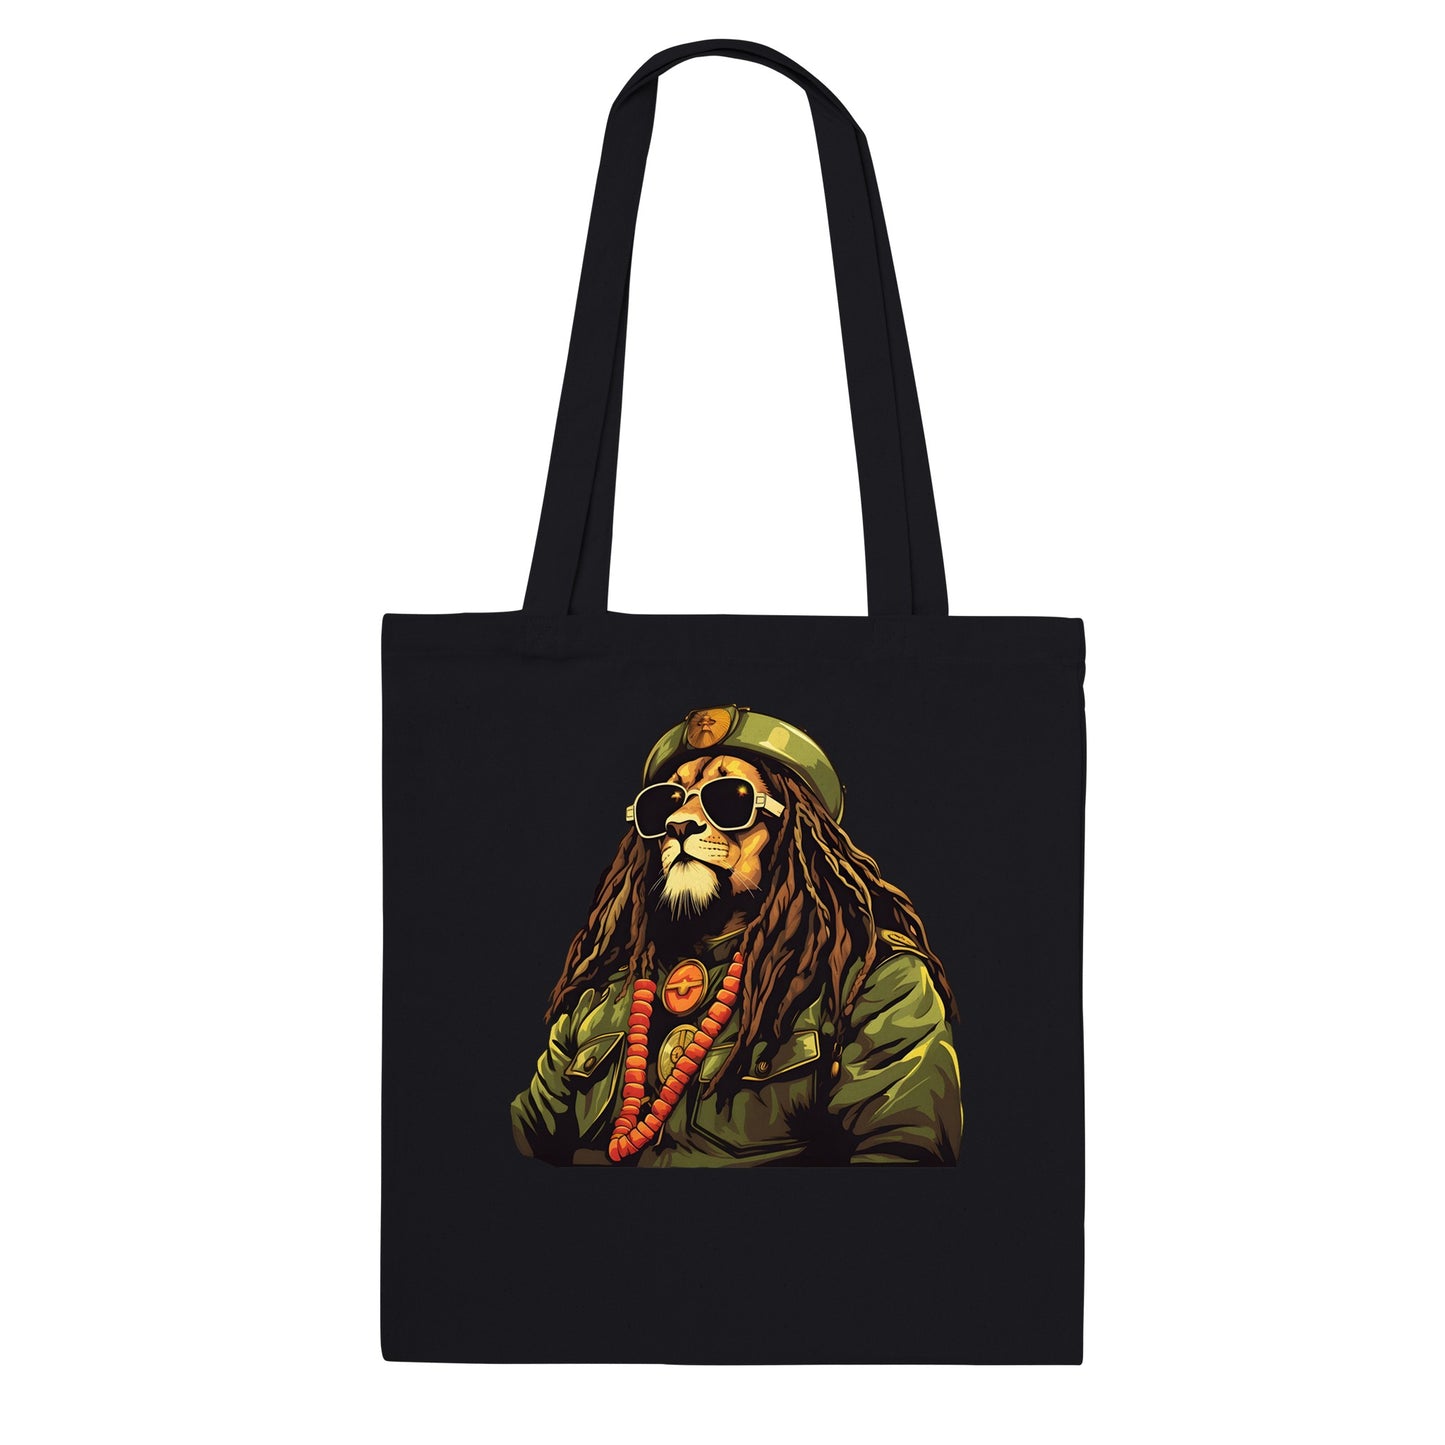 Haile Selassie Lion King Tote Bag